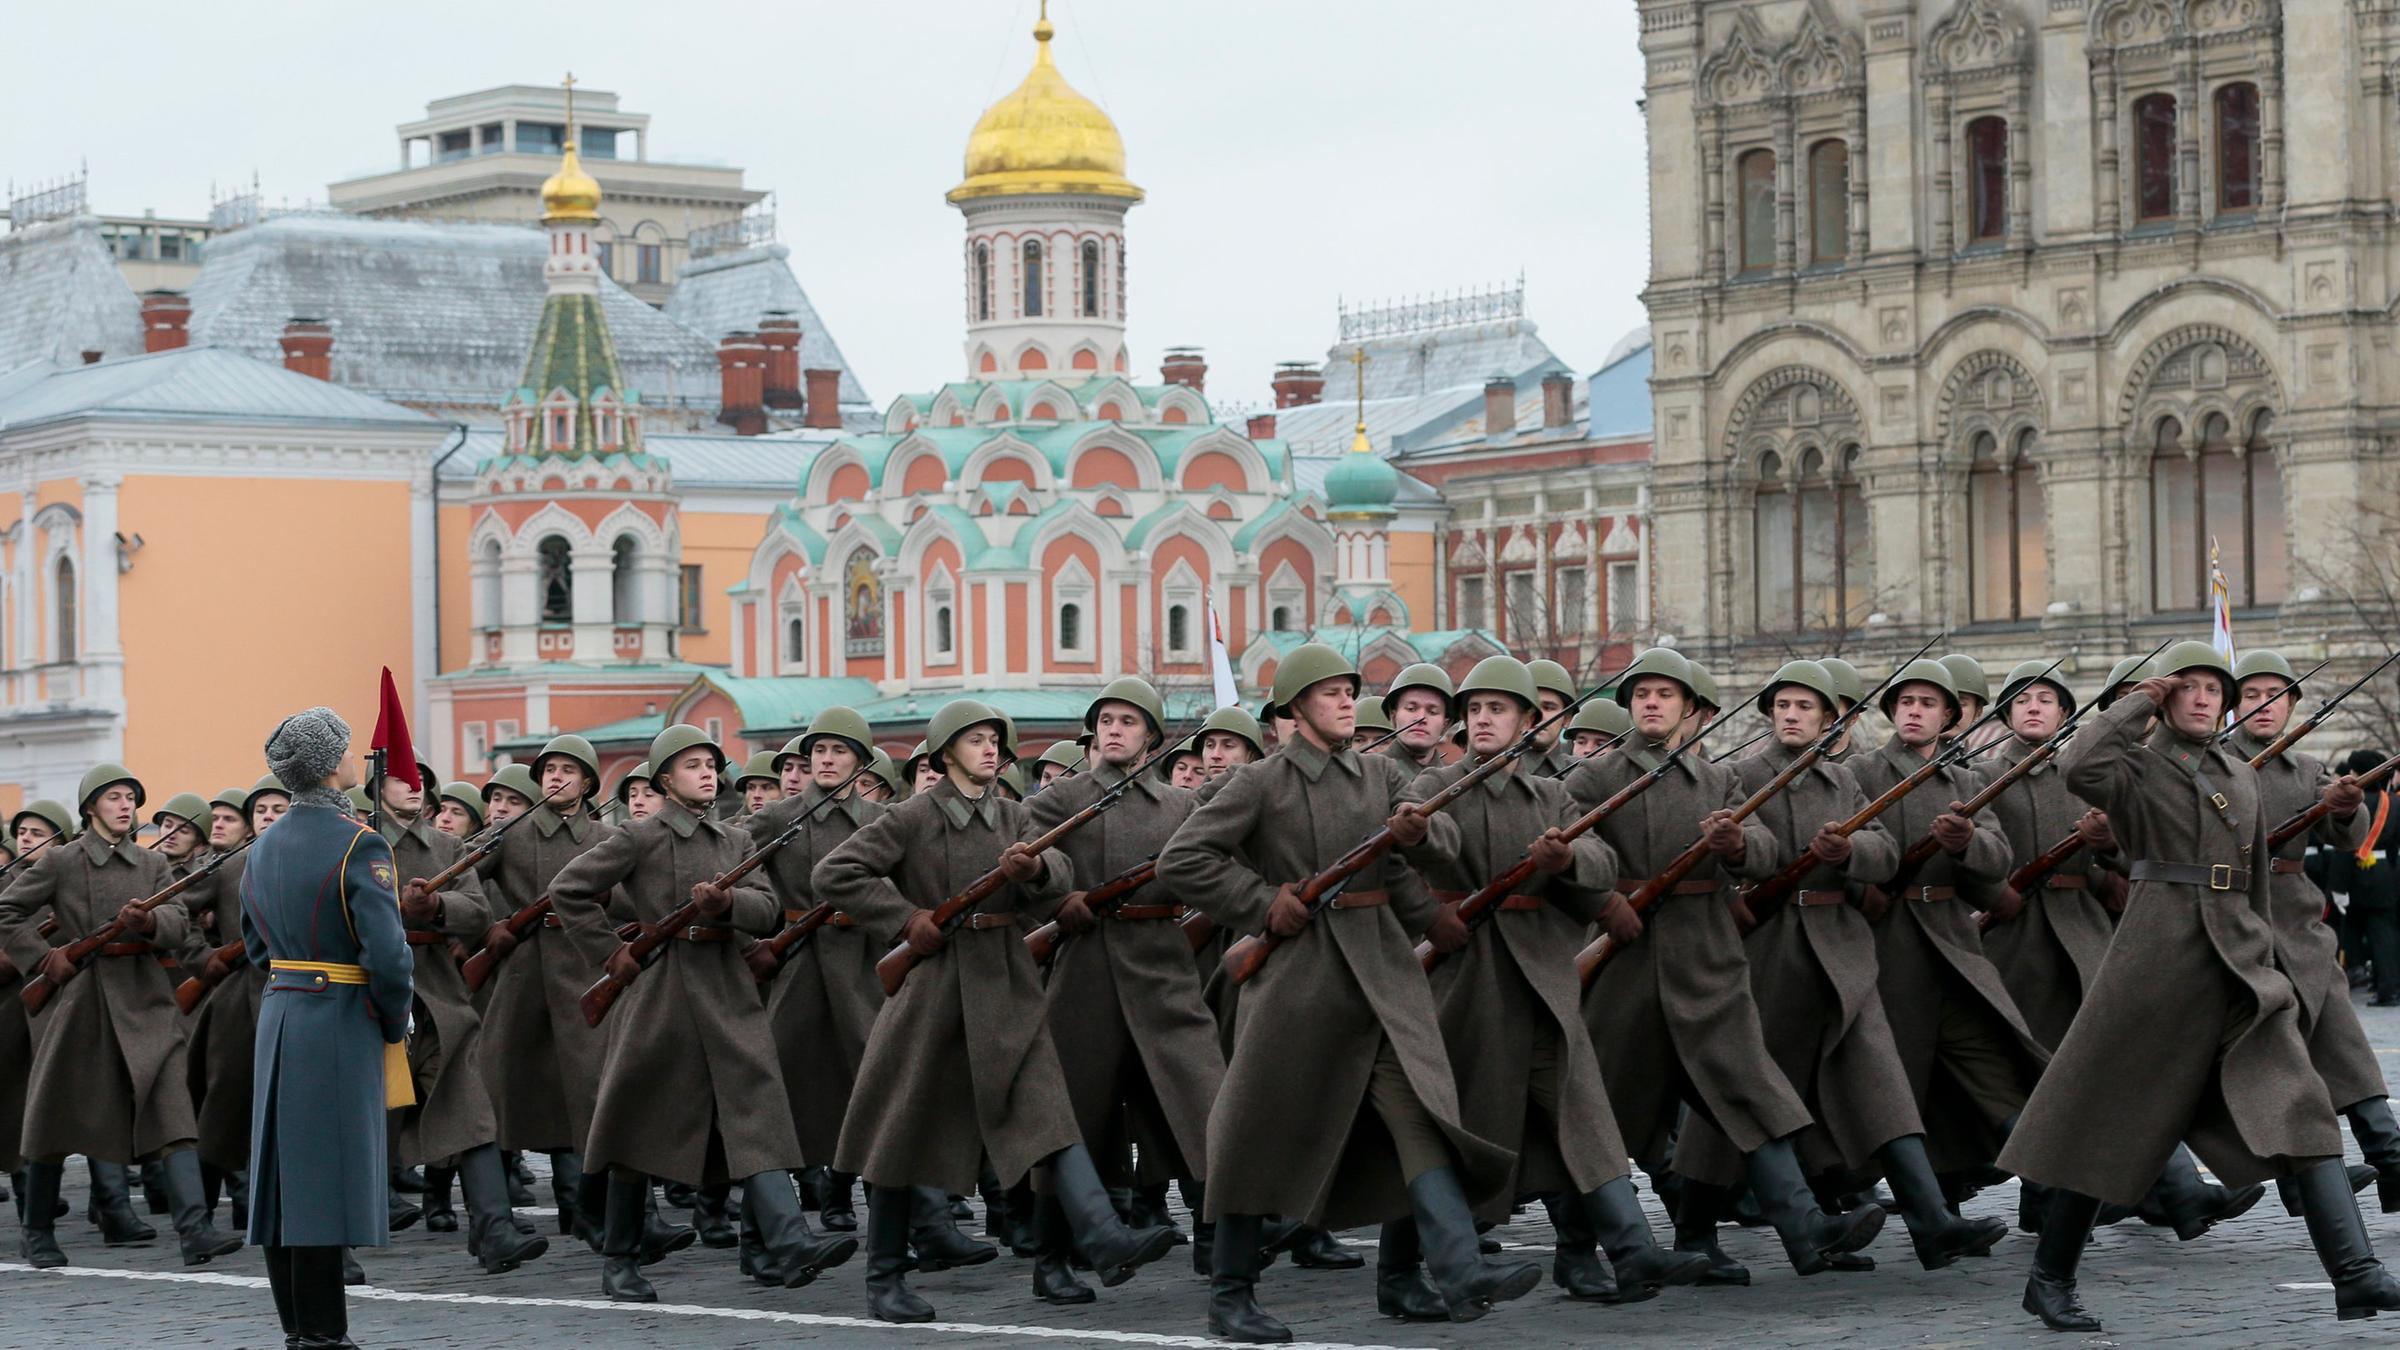 Где проходил парад 41. Парад 7 ноября 1941. Парад 1941 года на красной площади. Парад на красной площади 7 ноября 1941. Фото парада 7 ноября 1941 года на красной площади в Москве.